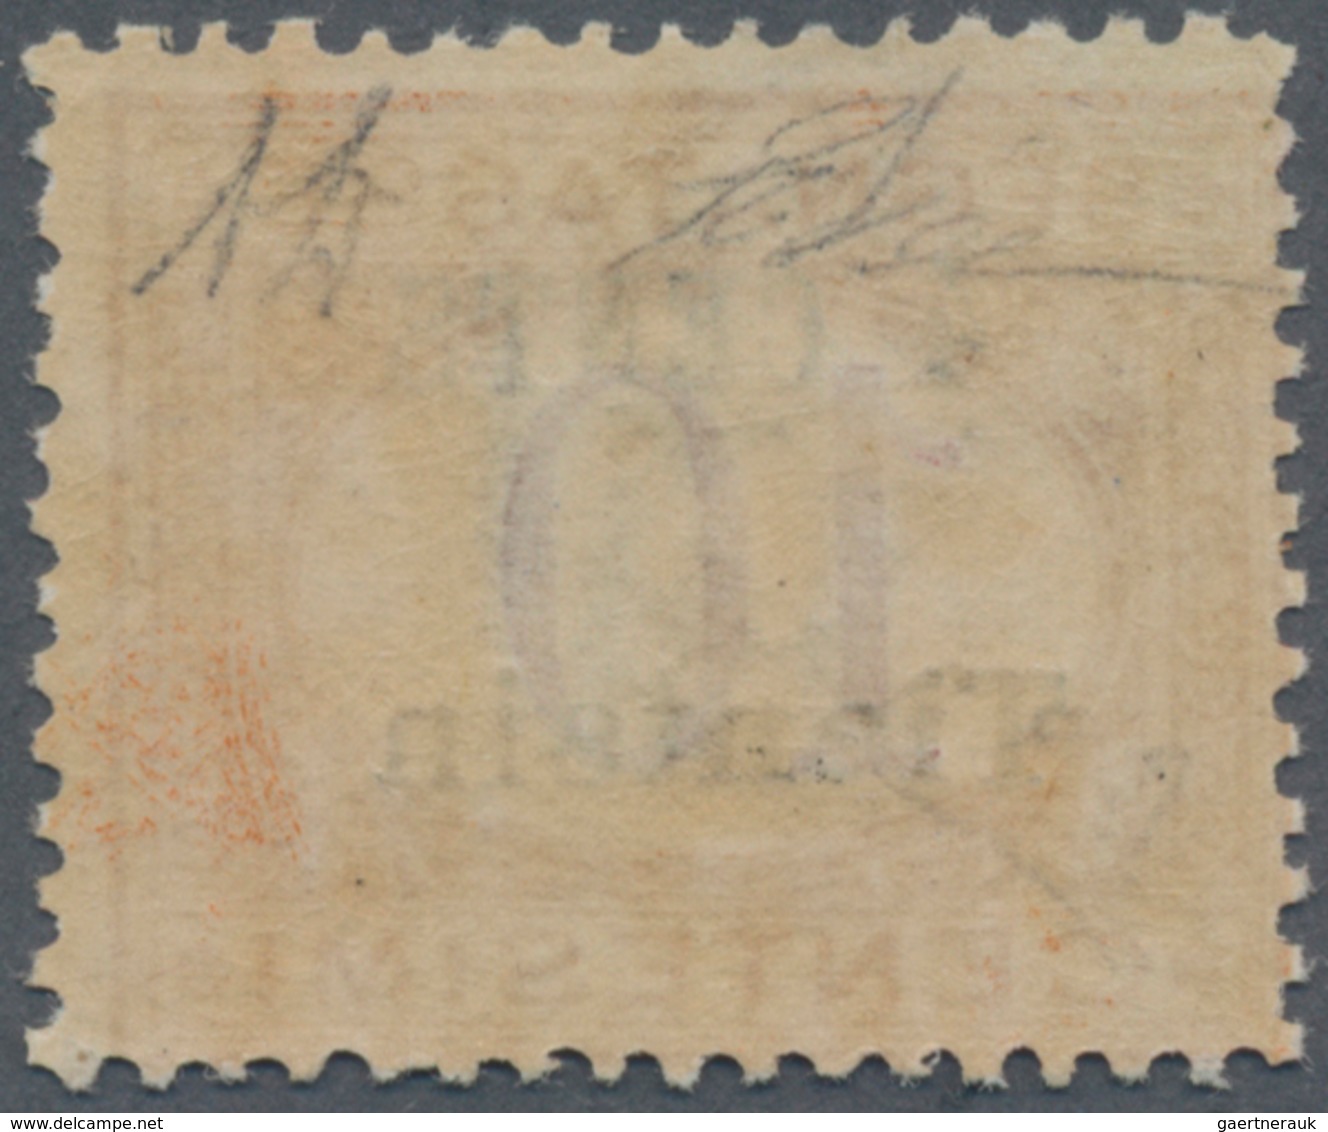 Italienische Post In China: 1918. Postage Due. "4 CENTS Tientsin" Overprint On 10 C Italian Postage - Tientsin